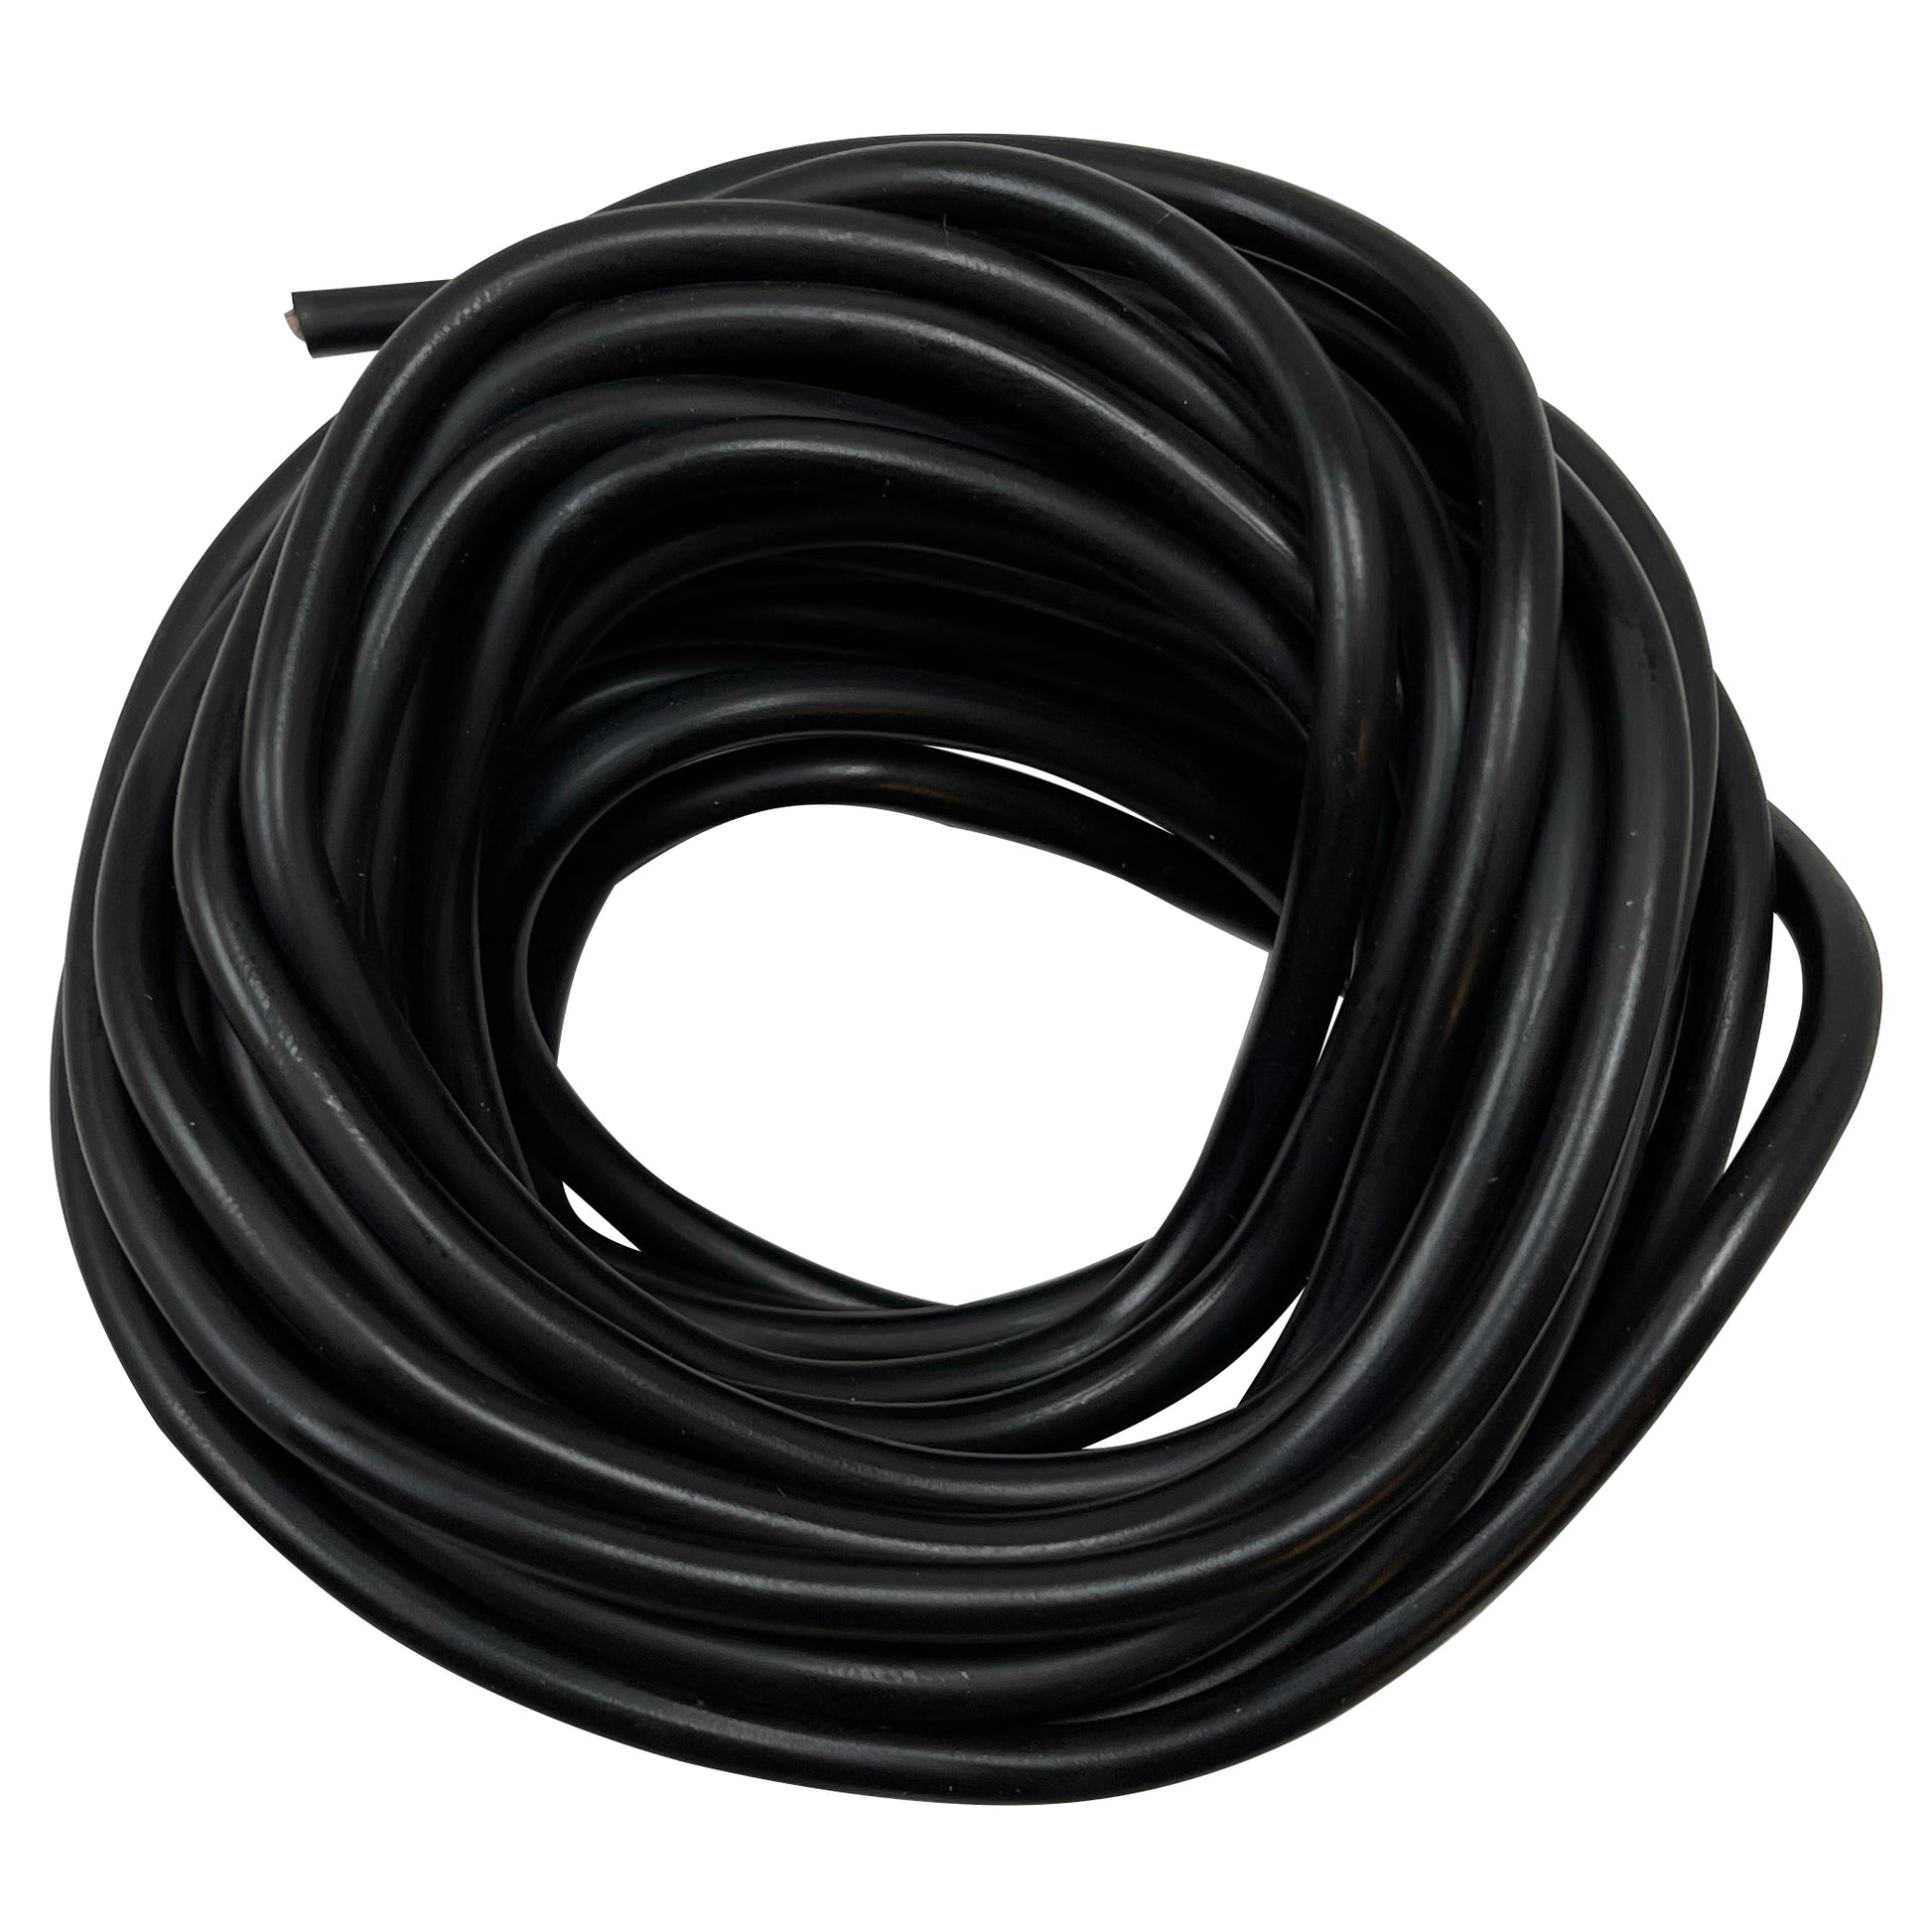 16 Gauge Universal Automotive Fusible Link Wire - 100' FT Spool